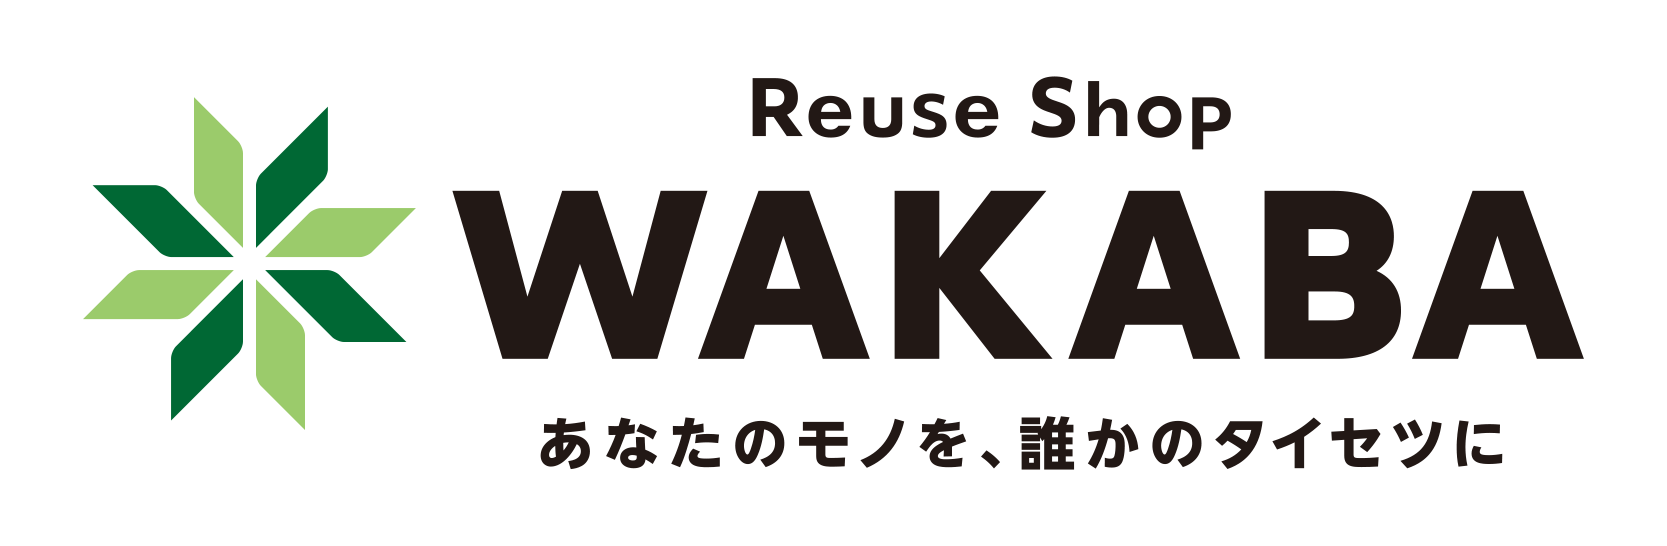 wakabaロゴ